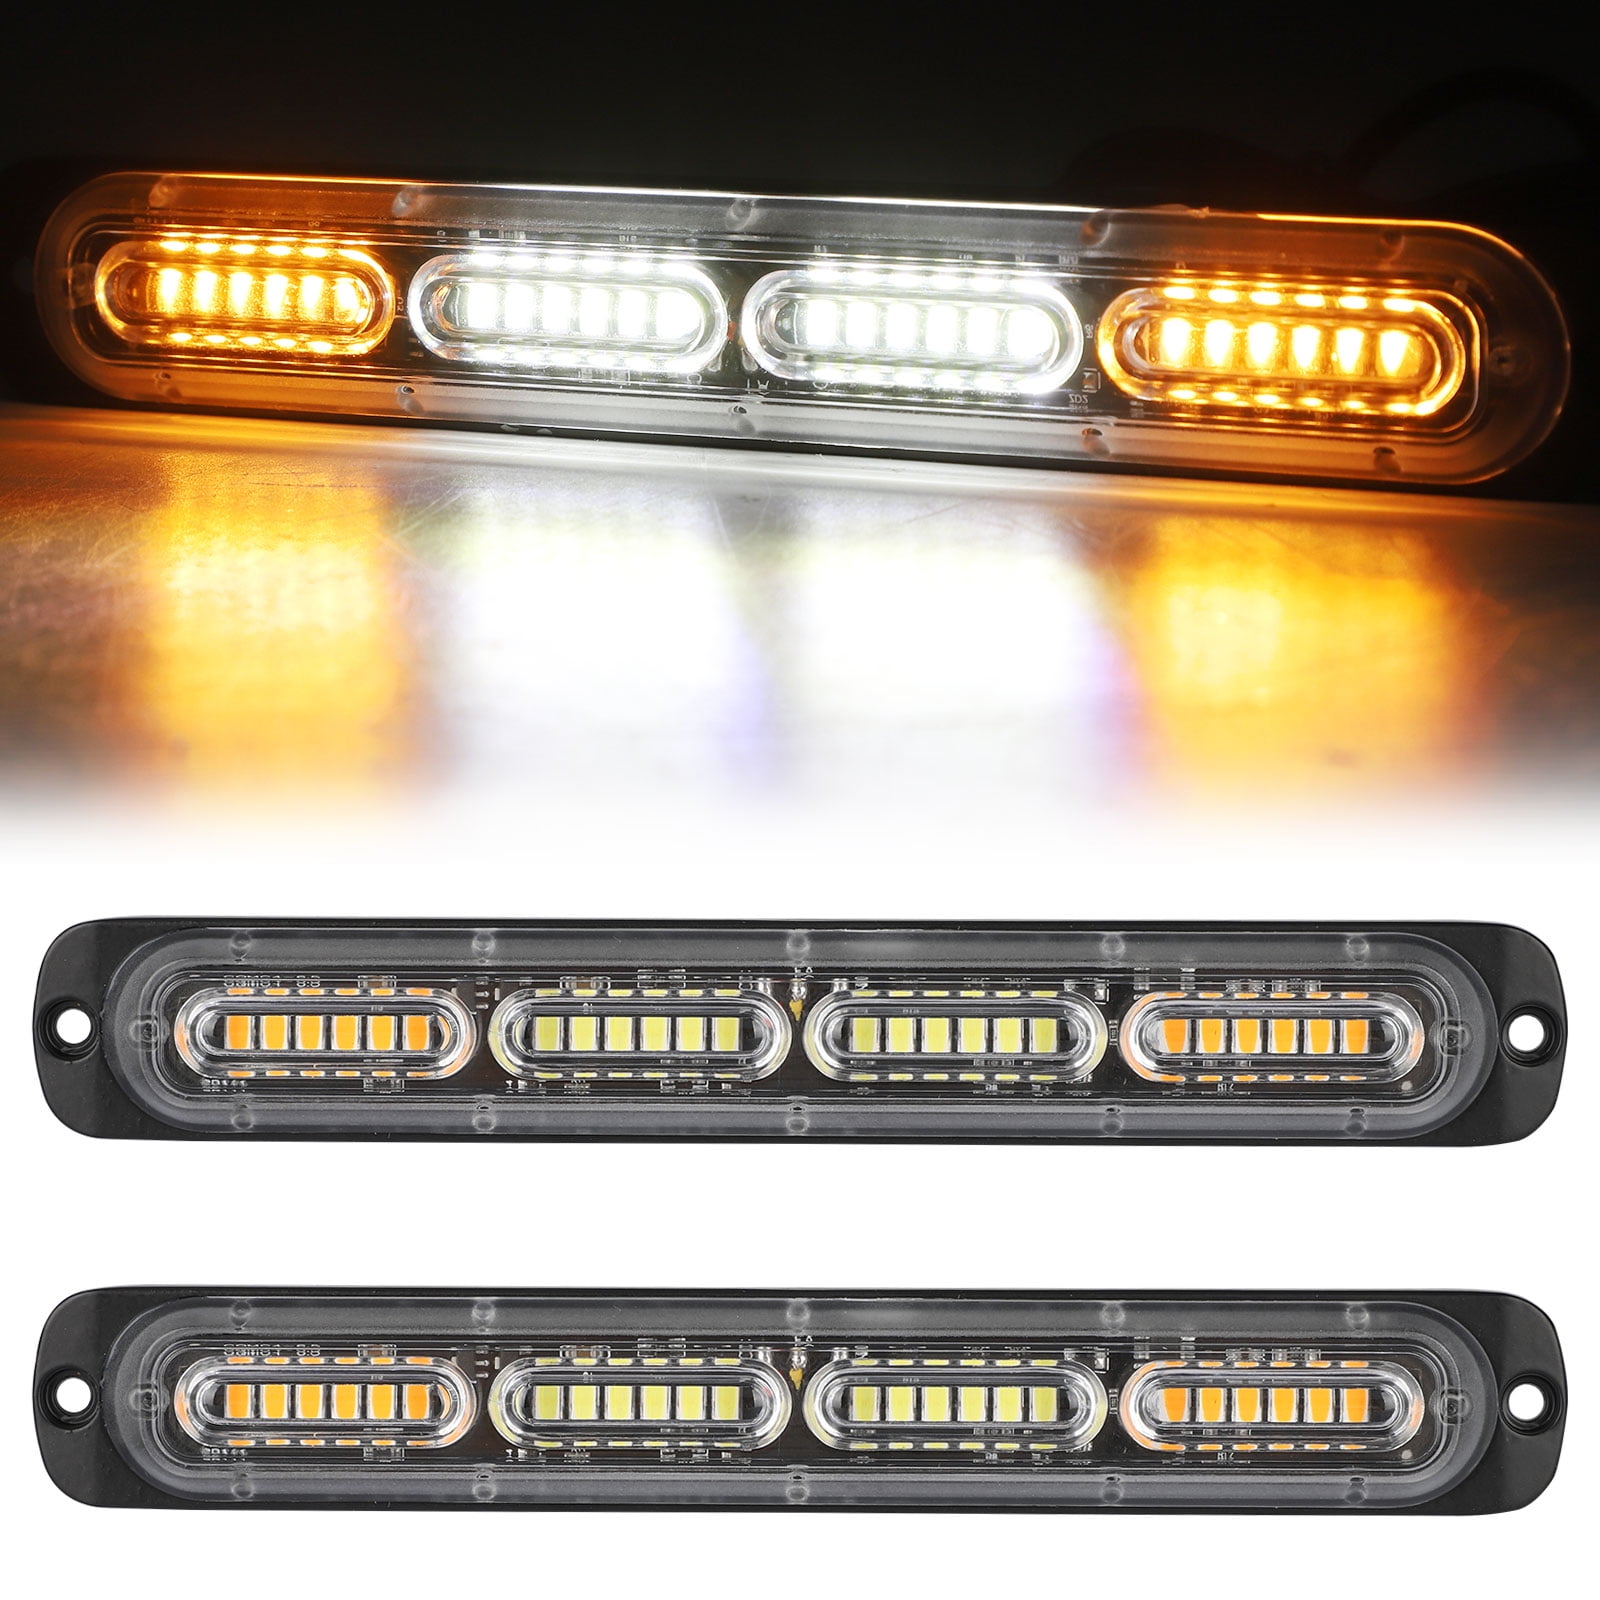 4 LED Car Dash Board Warning Emergency Traffic Visor Strobe Flashing Light White